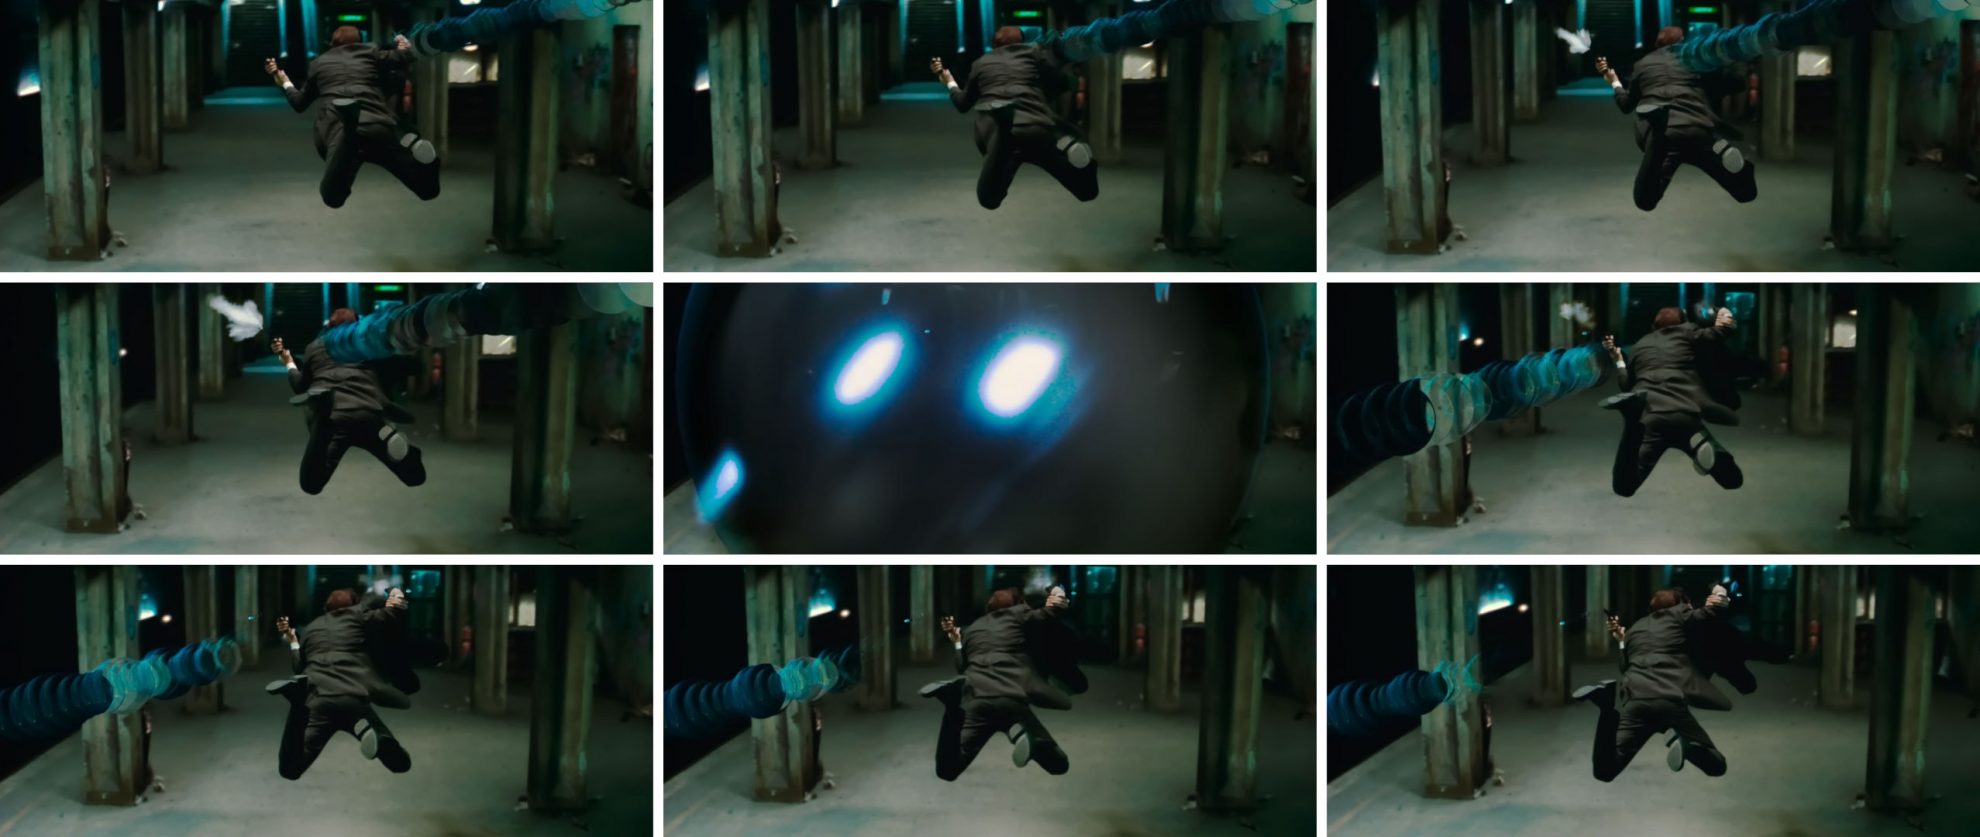 Standbildserie aus "The Matrix"